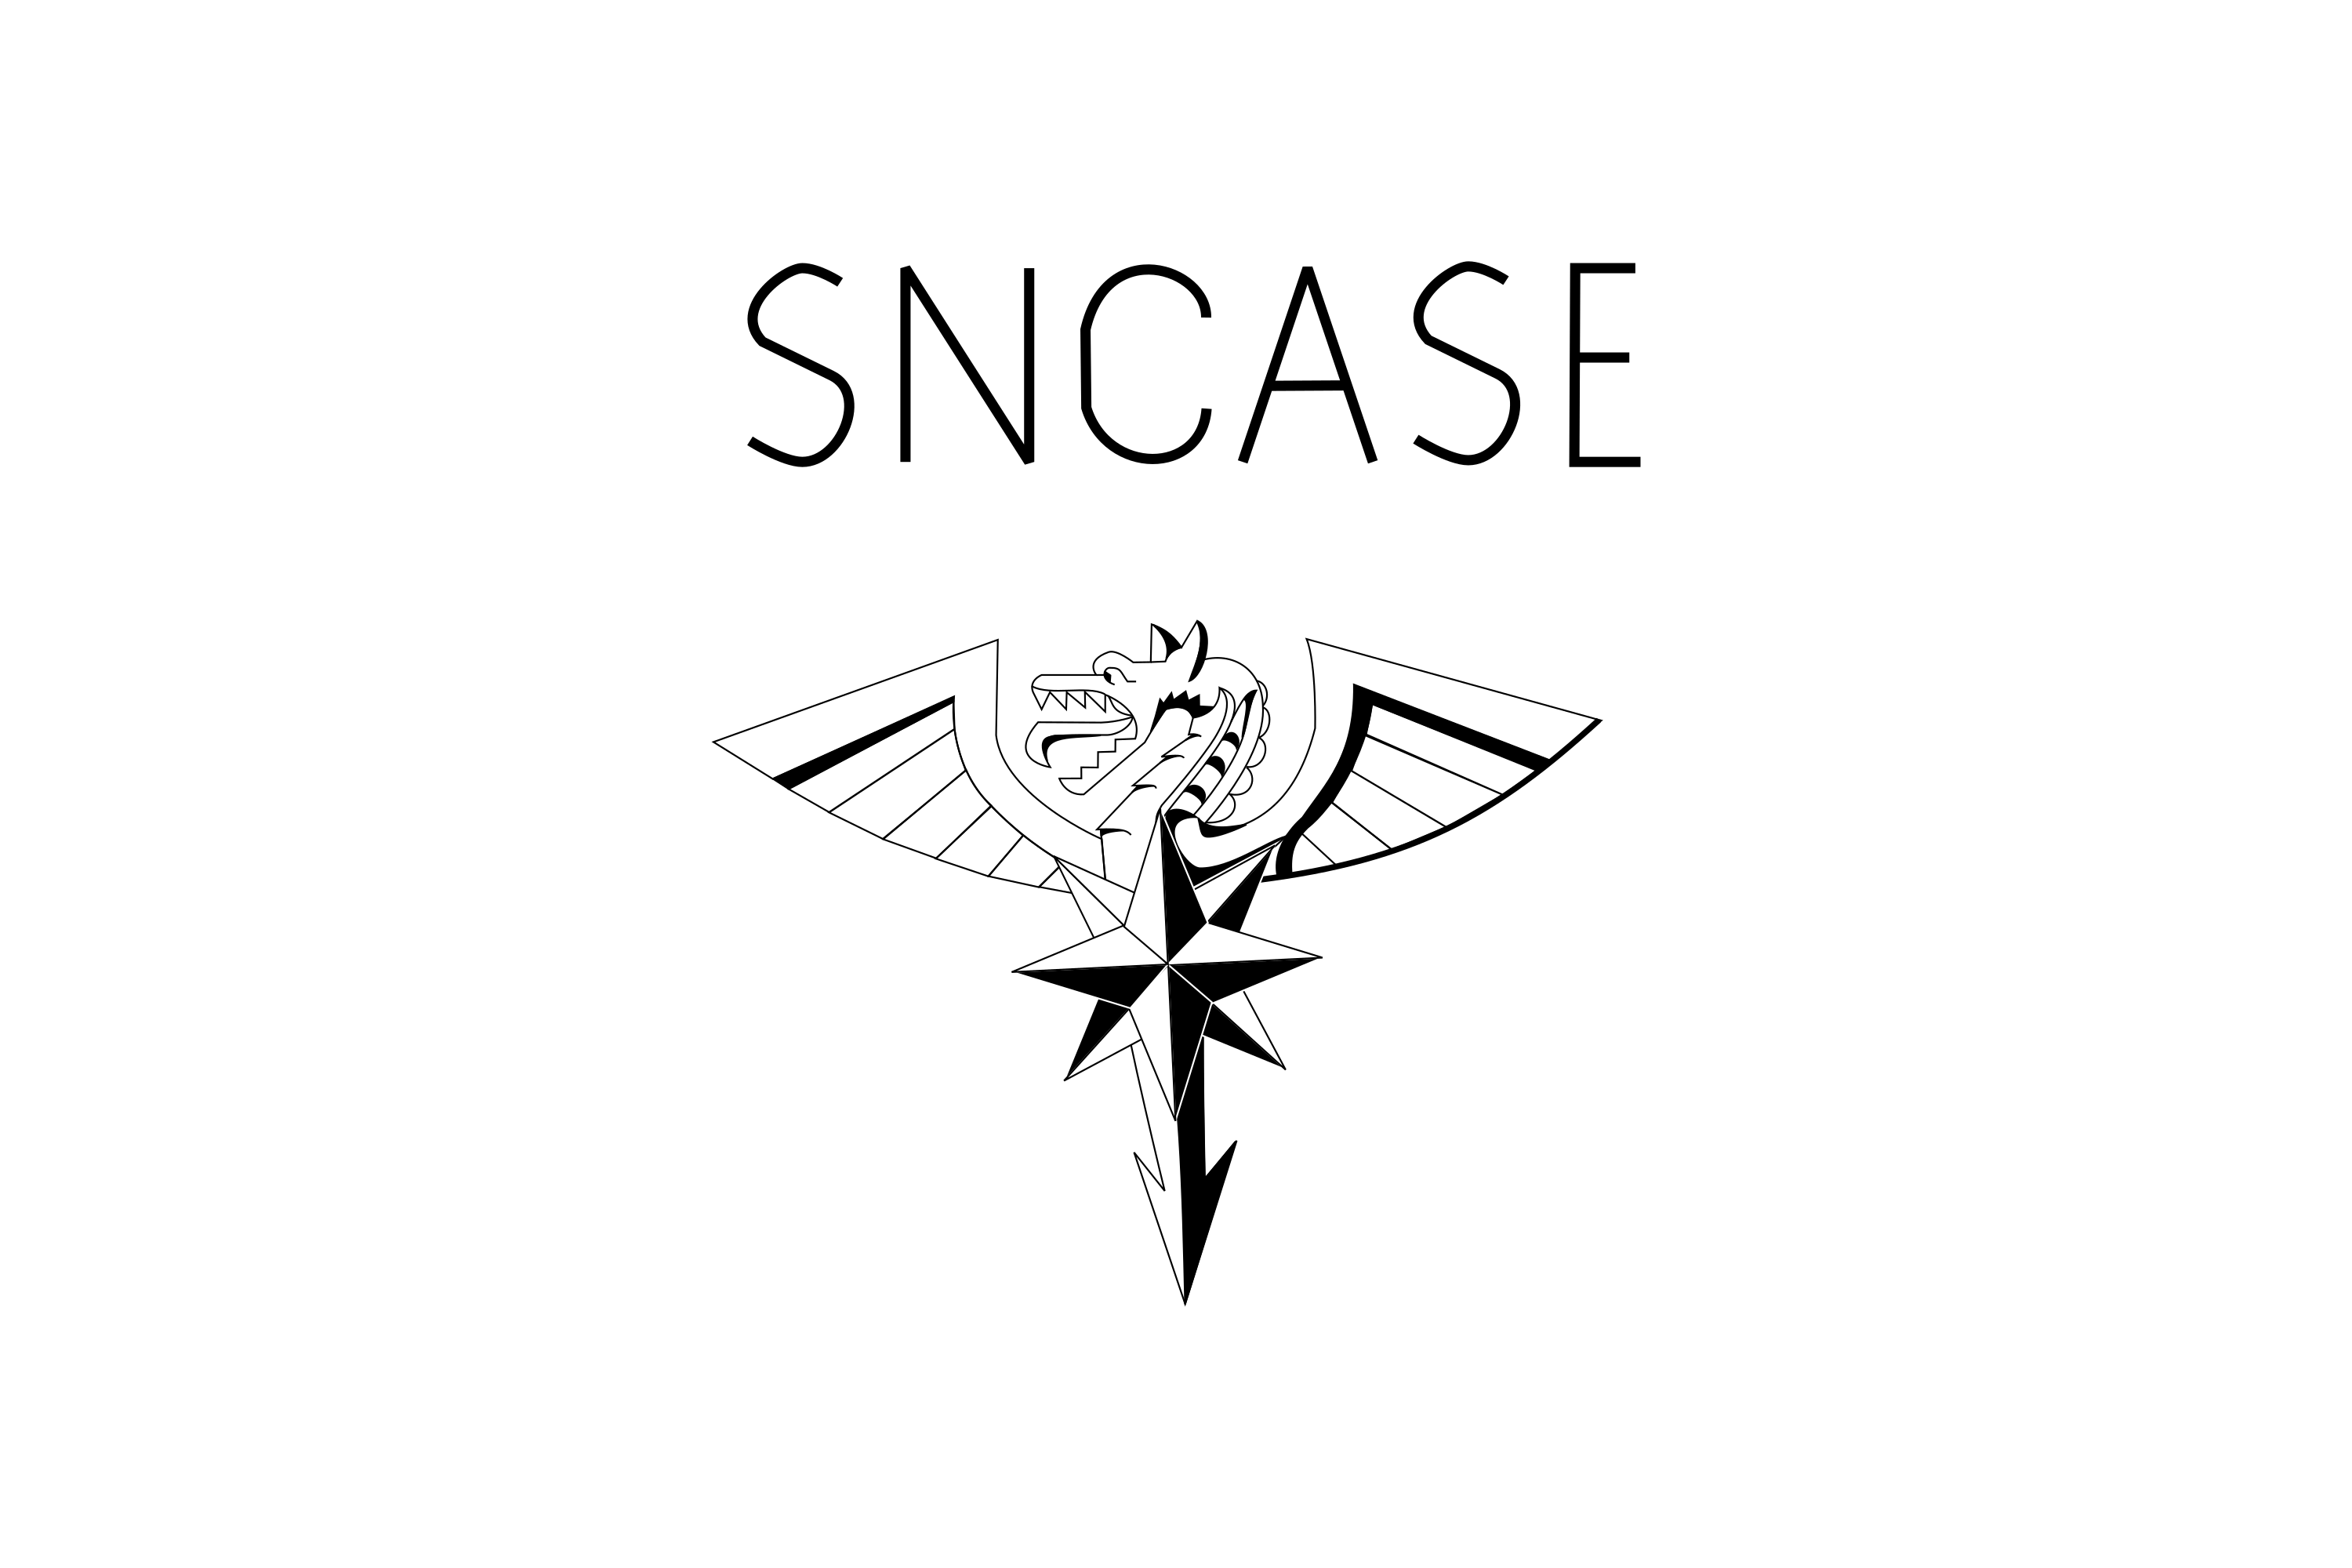 SNCASE Logo